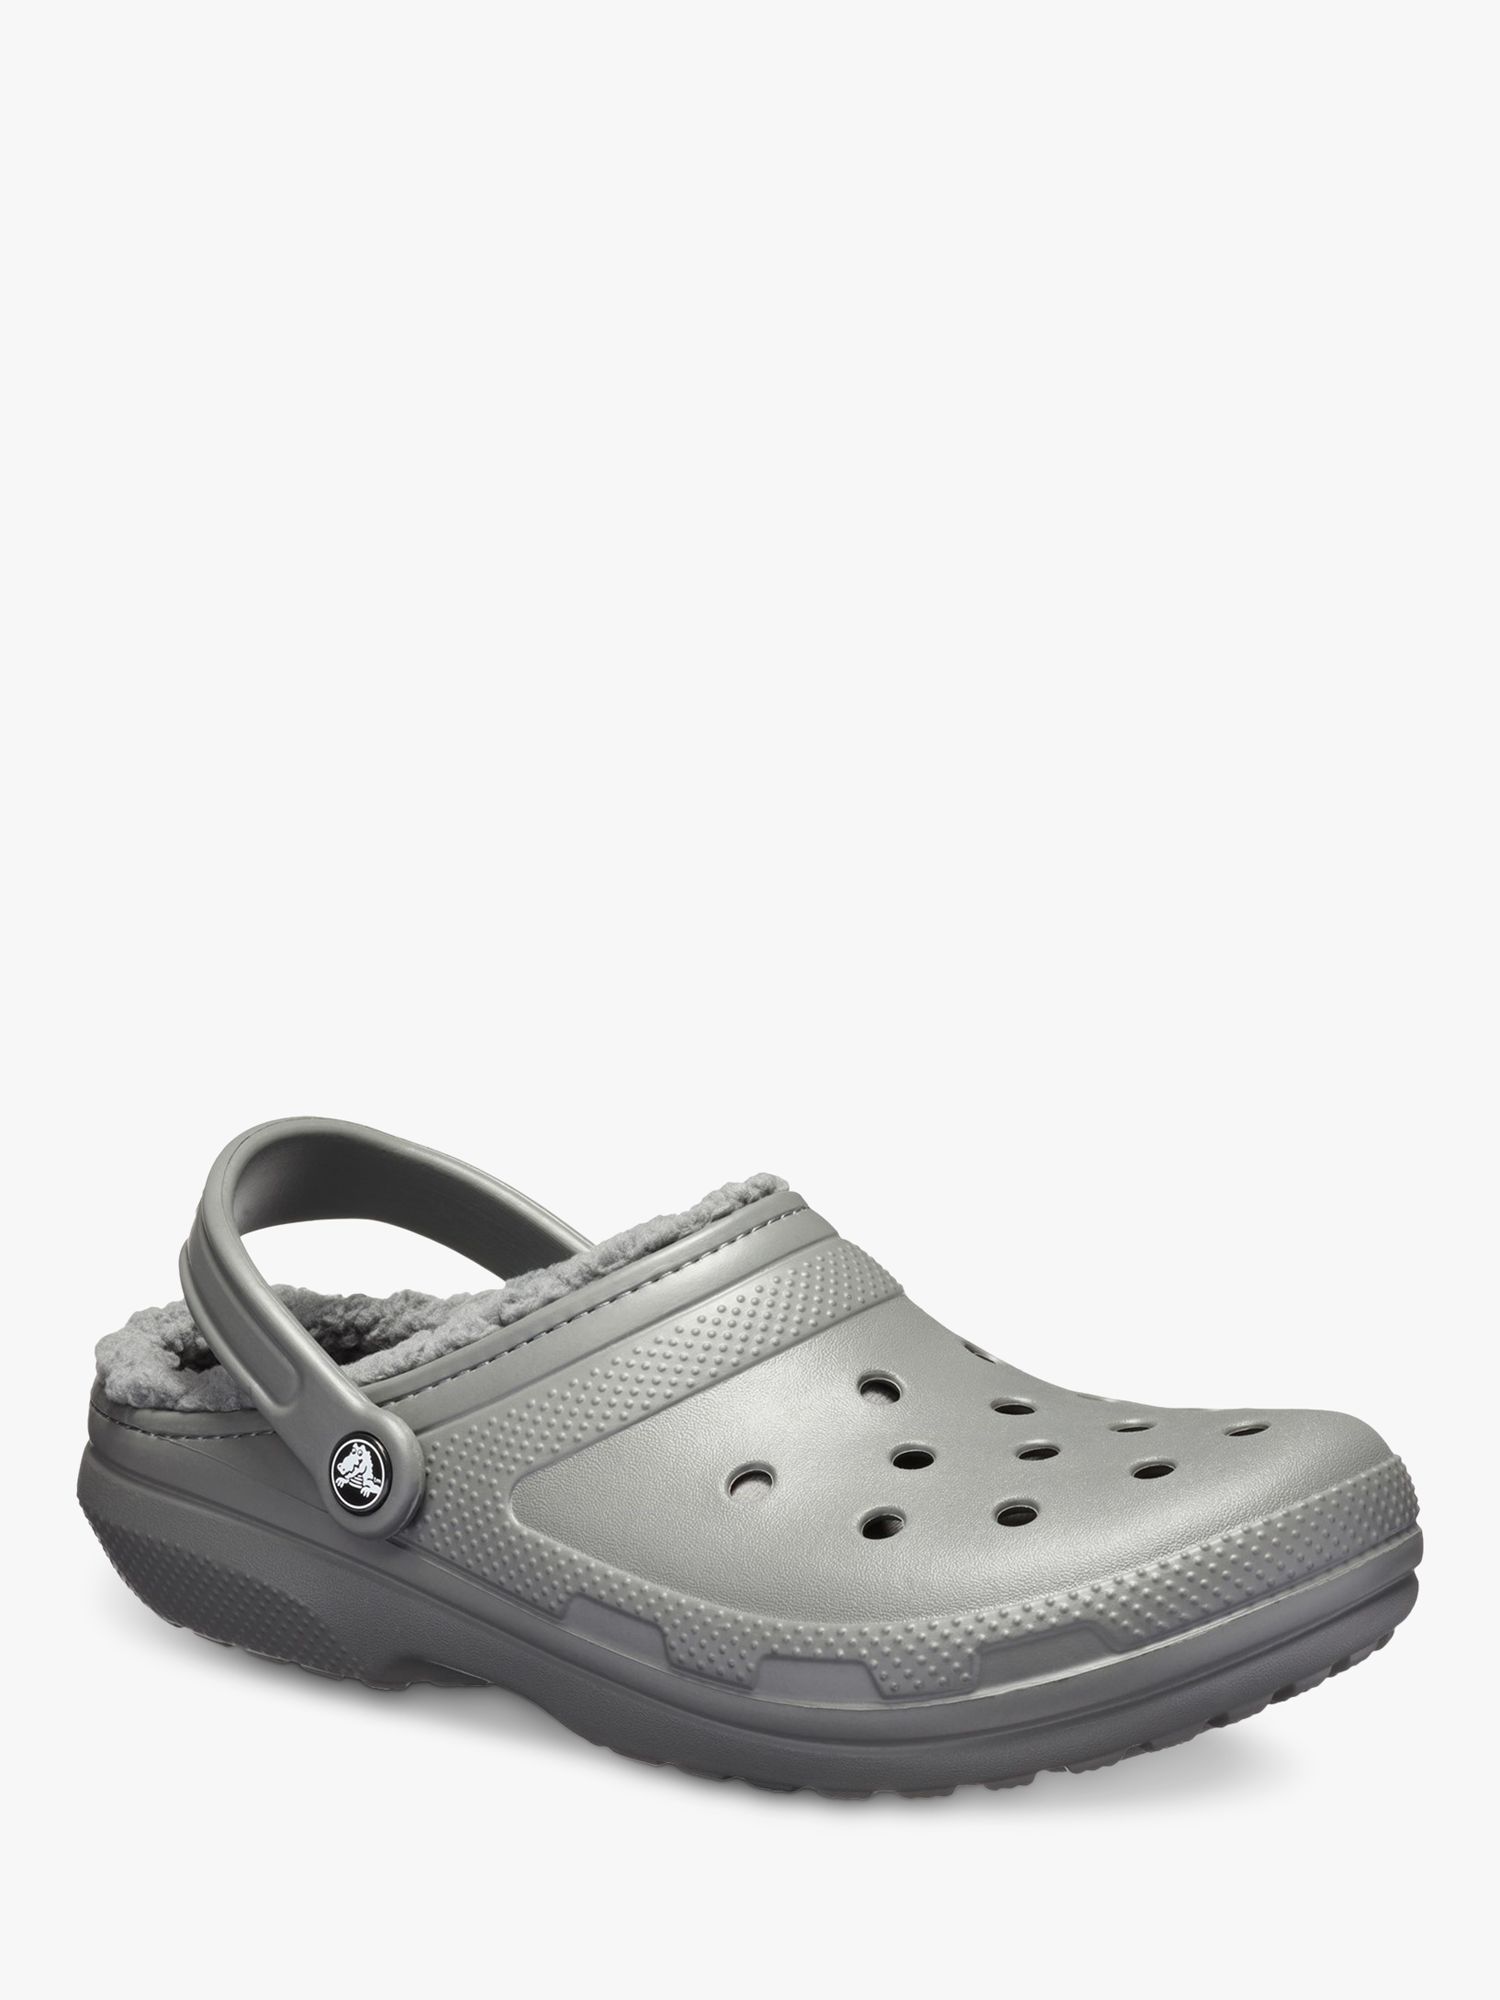 Crocs Classic Lined Clogs, Grey, 6